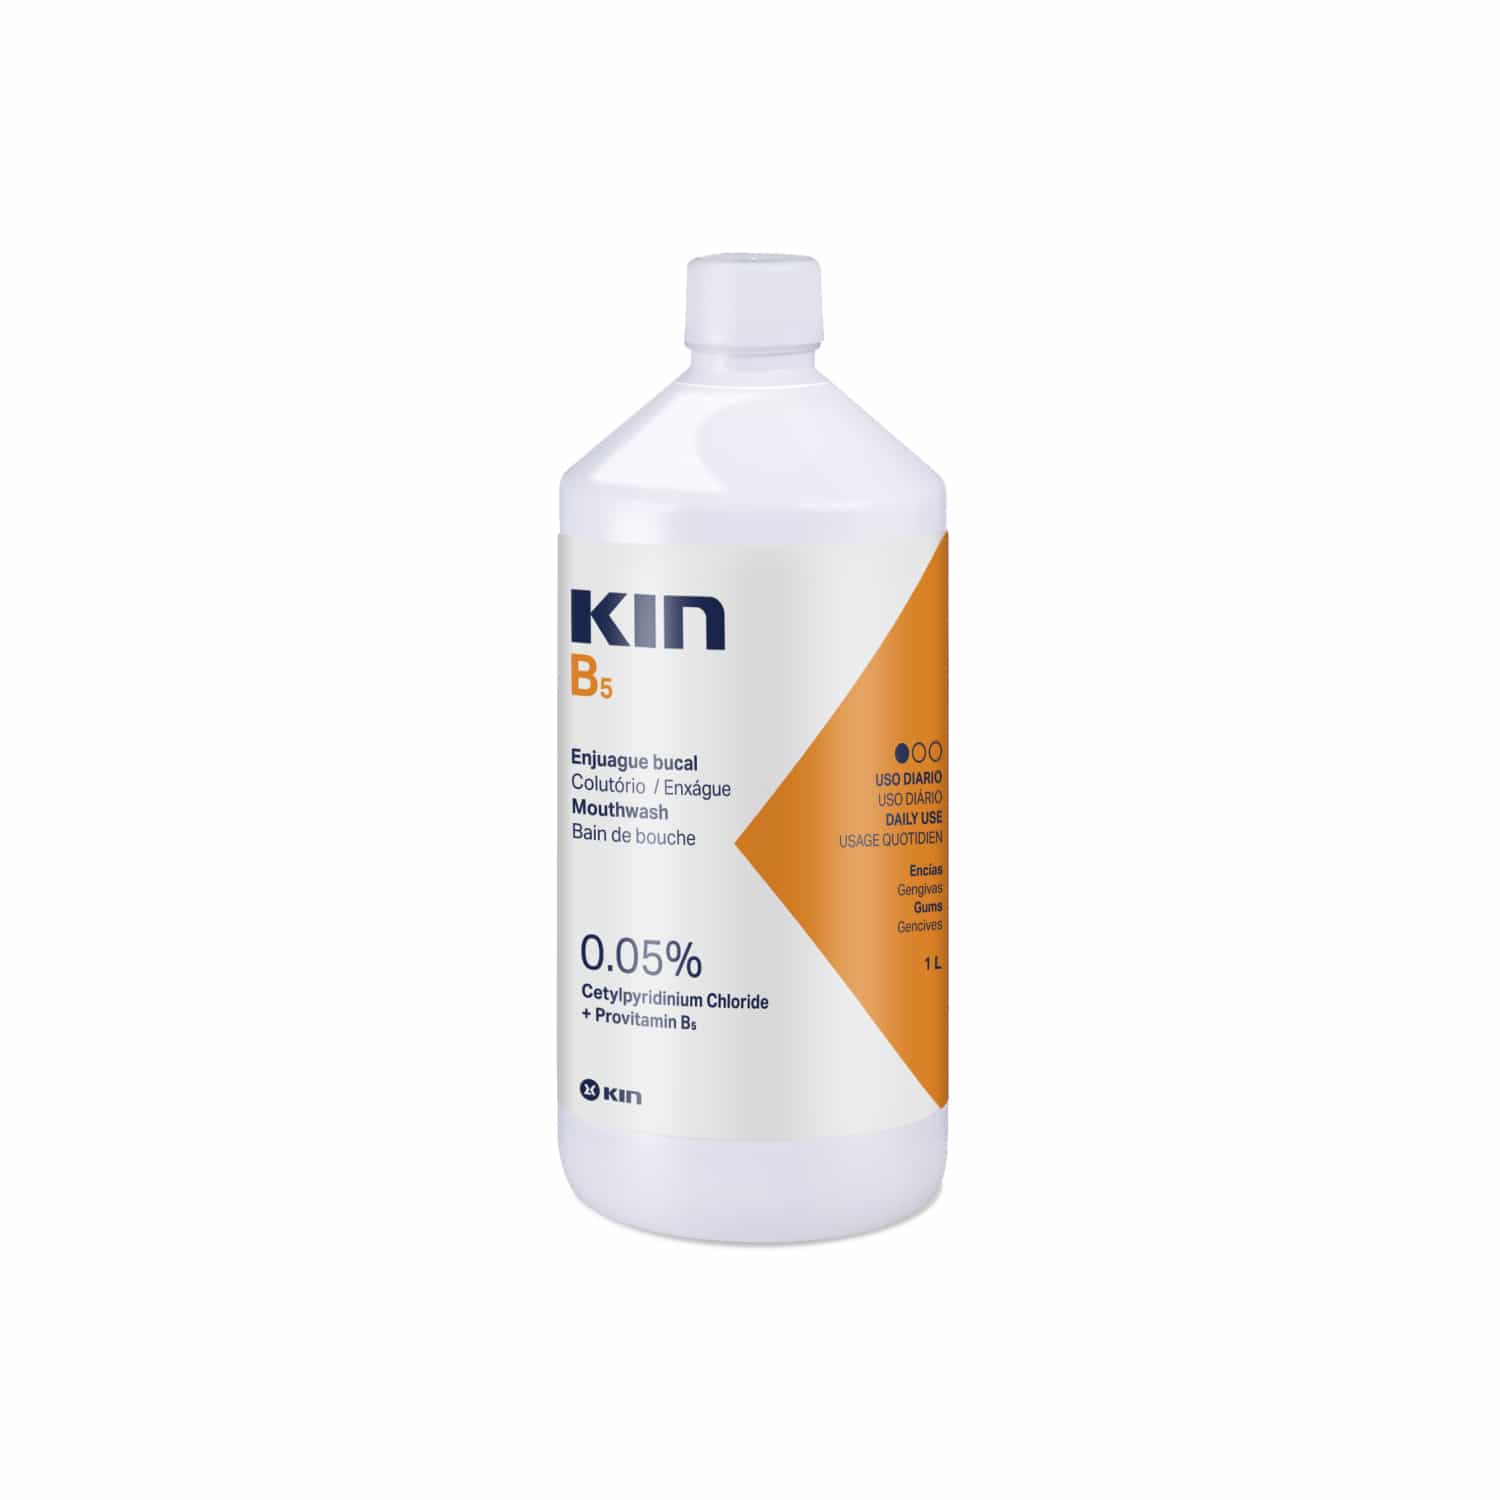 KIN B5 enxaguante bucal 1 litro